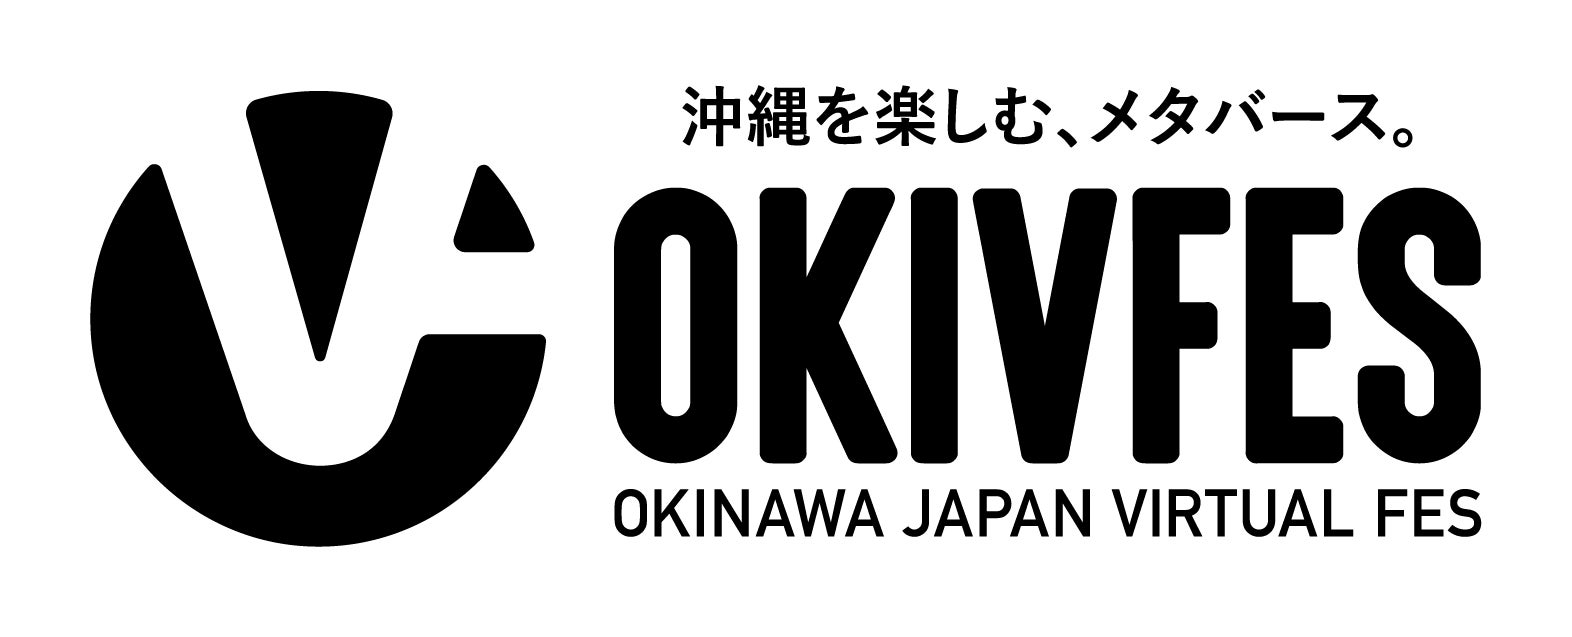 「ORANGE RANGE ㊗21周年! メタバースナイト in VIRTUAL PYRAMID」開催決定！沖縄のメタバース